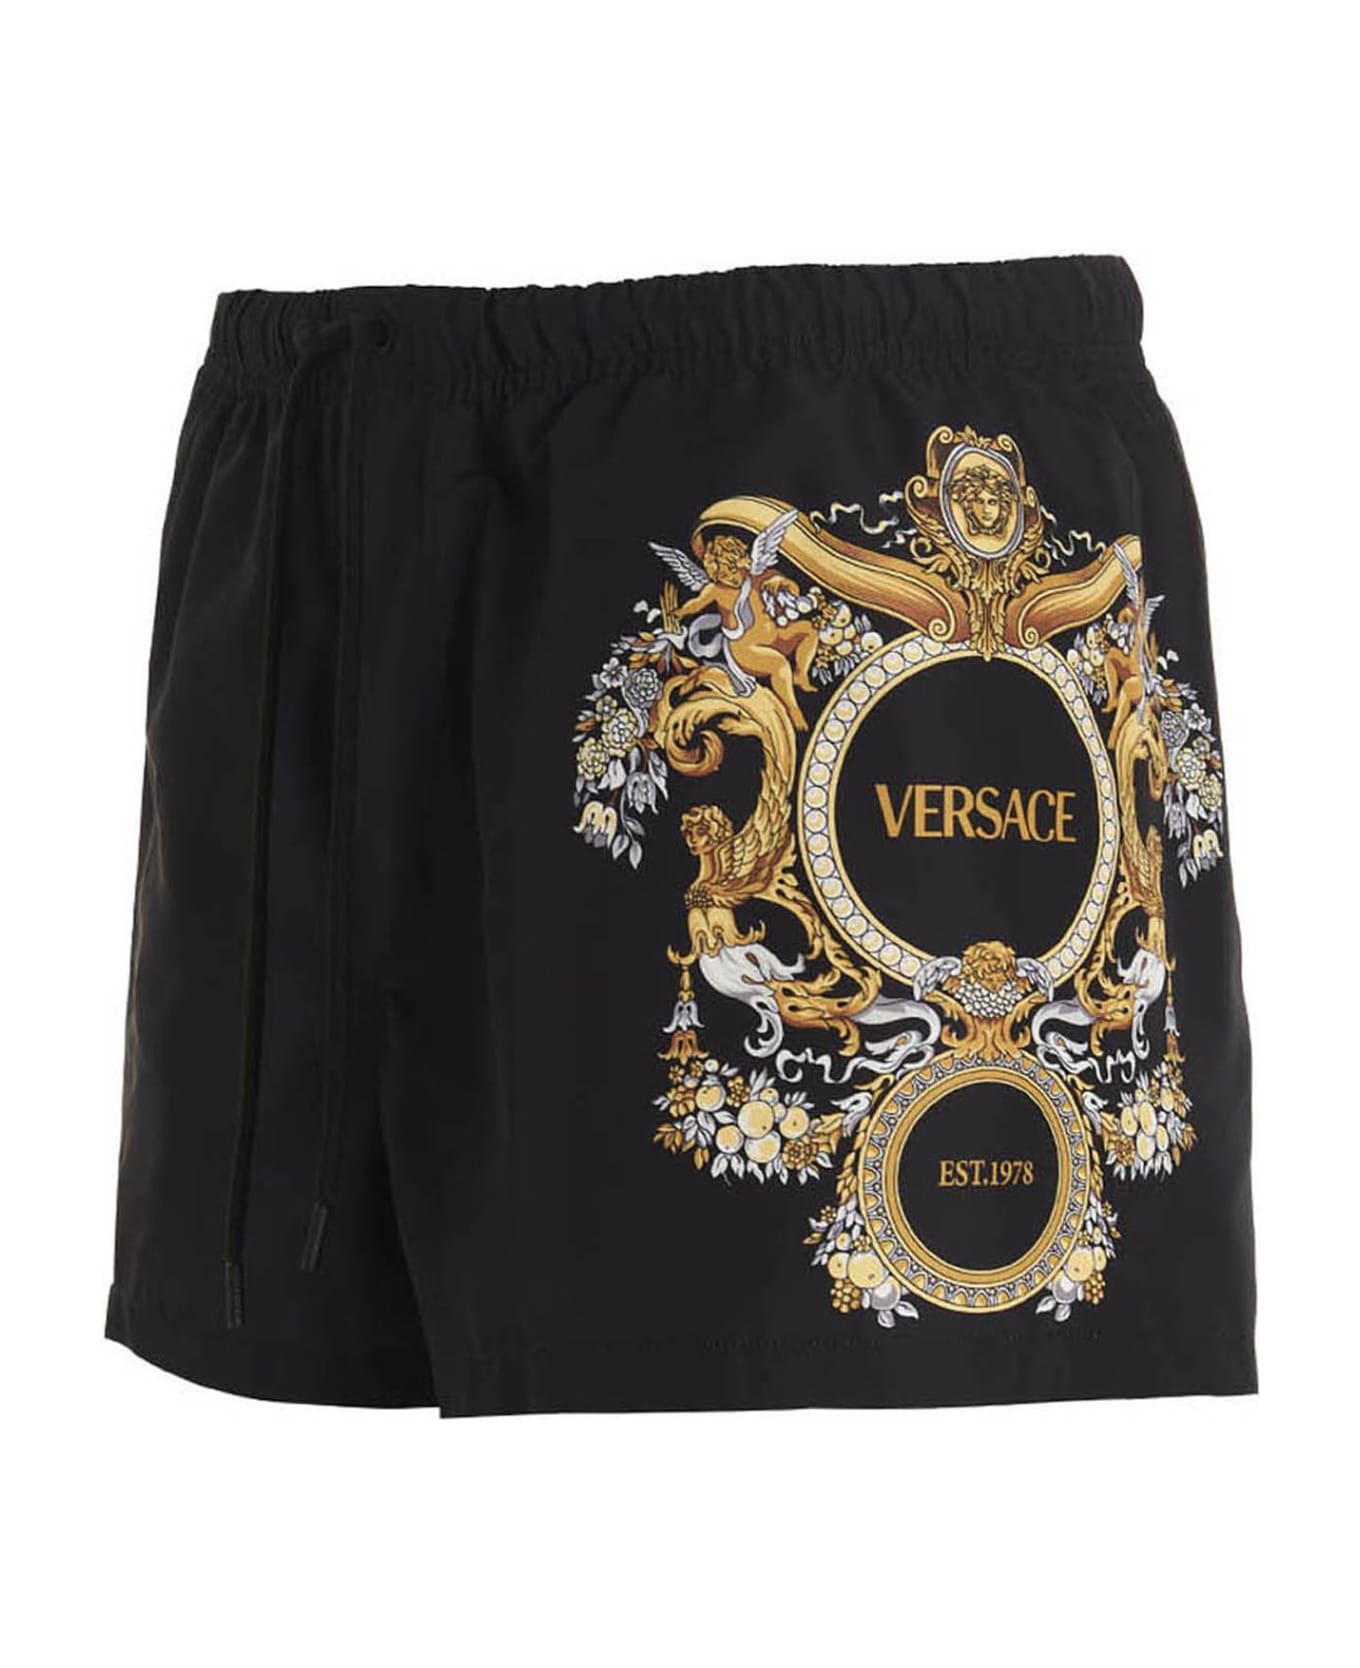 Versace 'versace Milano Est 1978' Swim Shorts - Black  